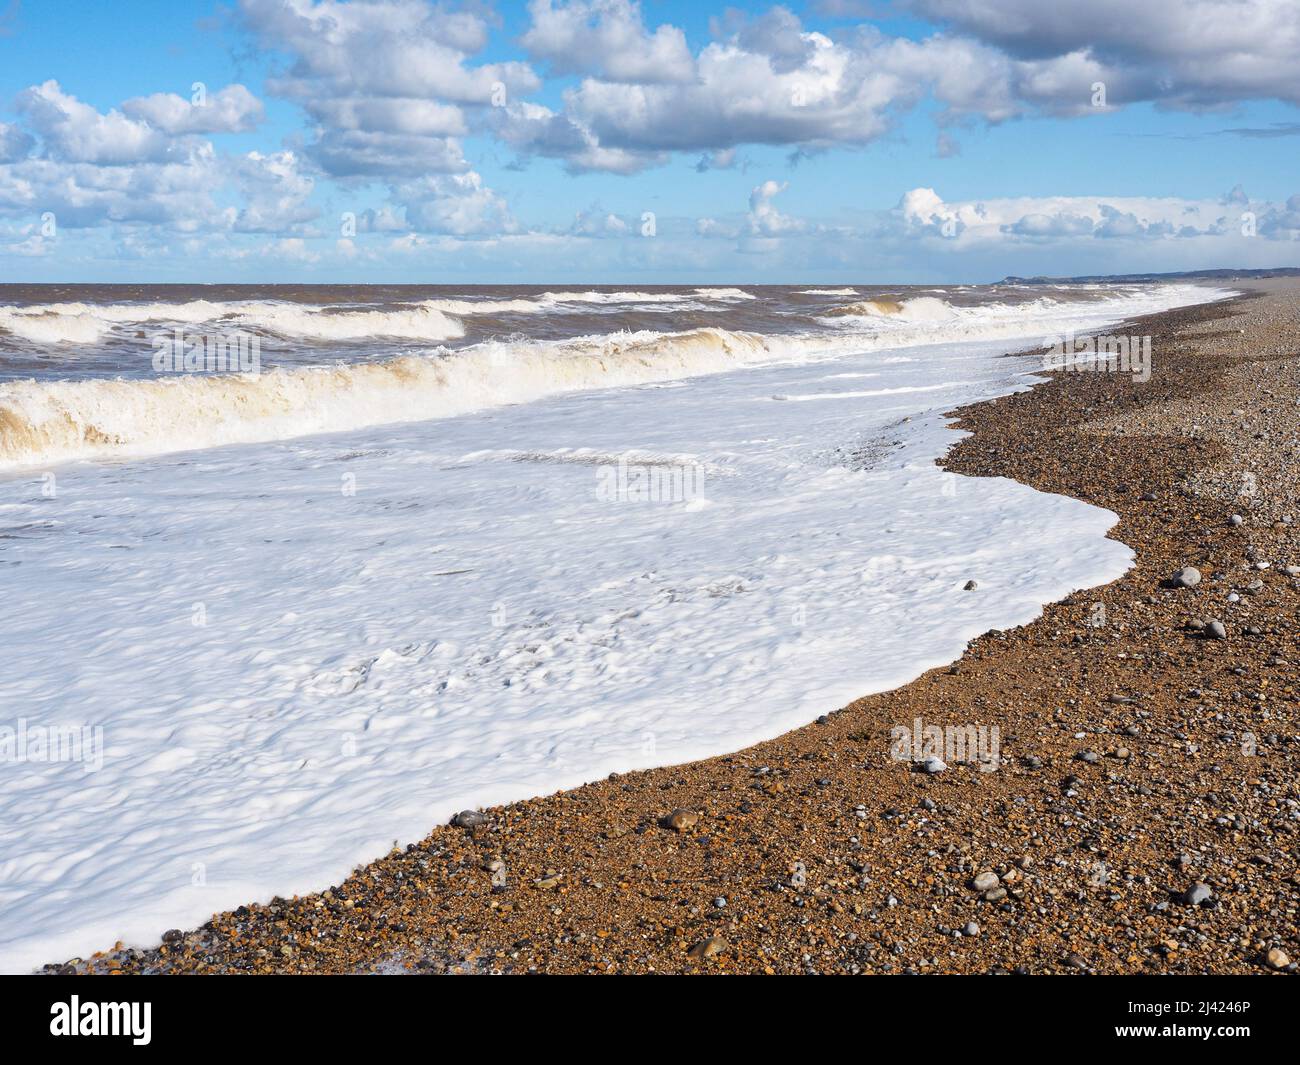 Waves crash onto beach under blue sky and white clouds, Blakeney Point, Norfolk Stock Photo